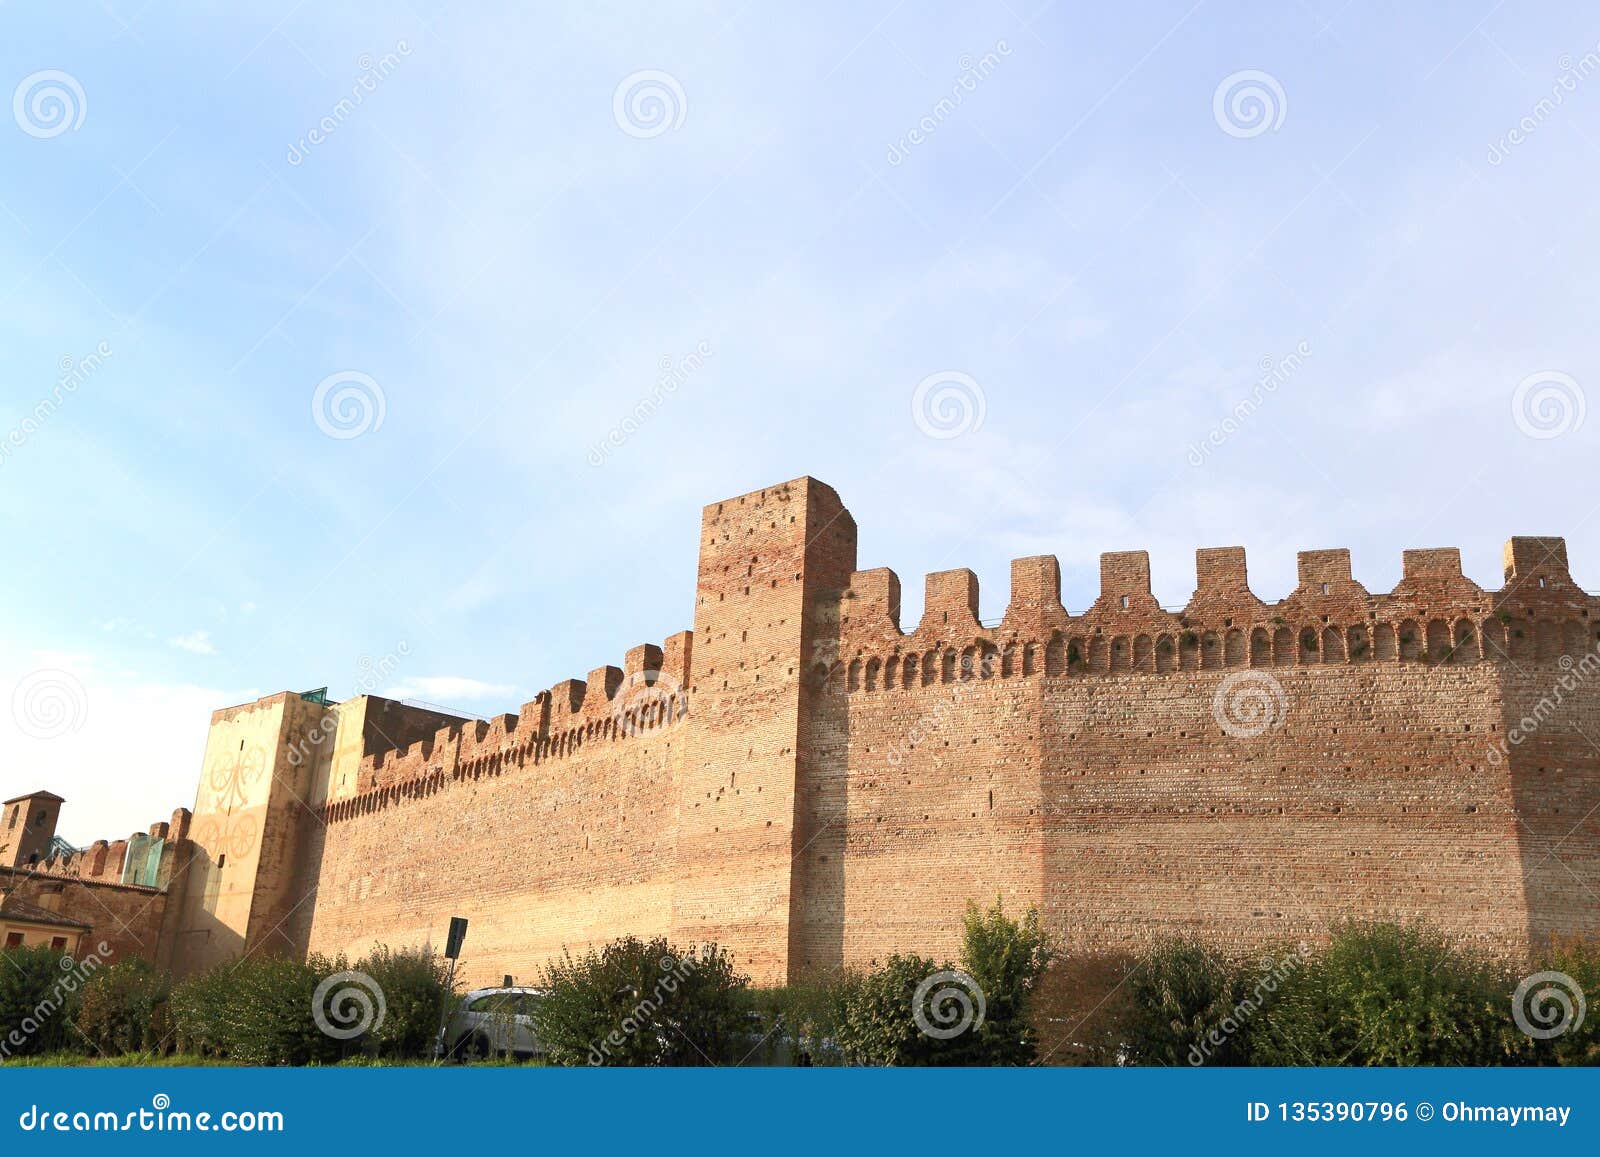 medieval castle of cittadella